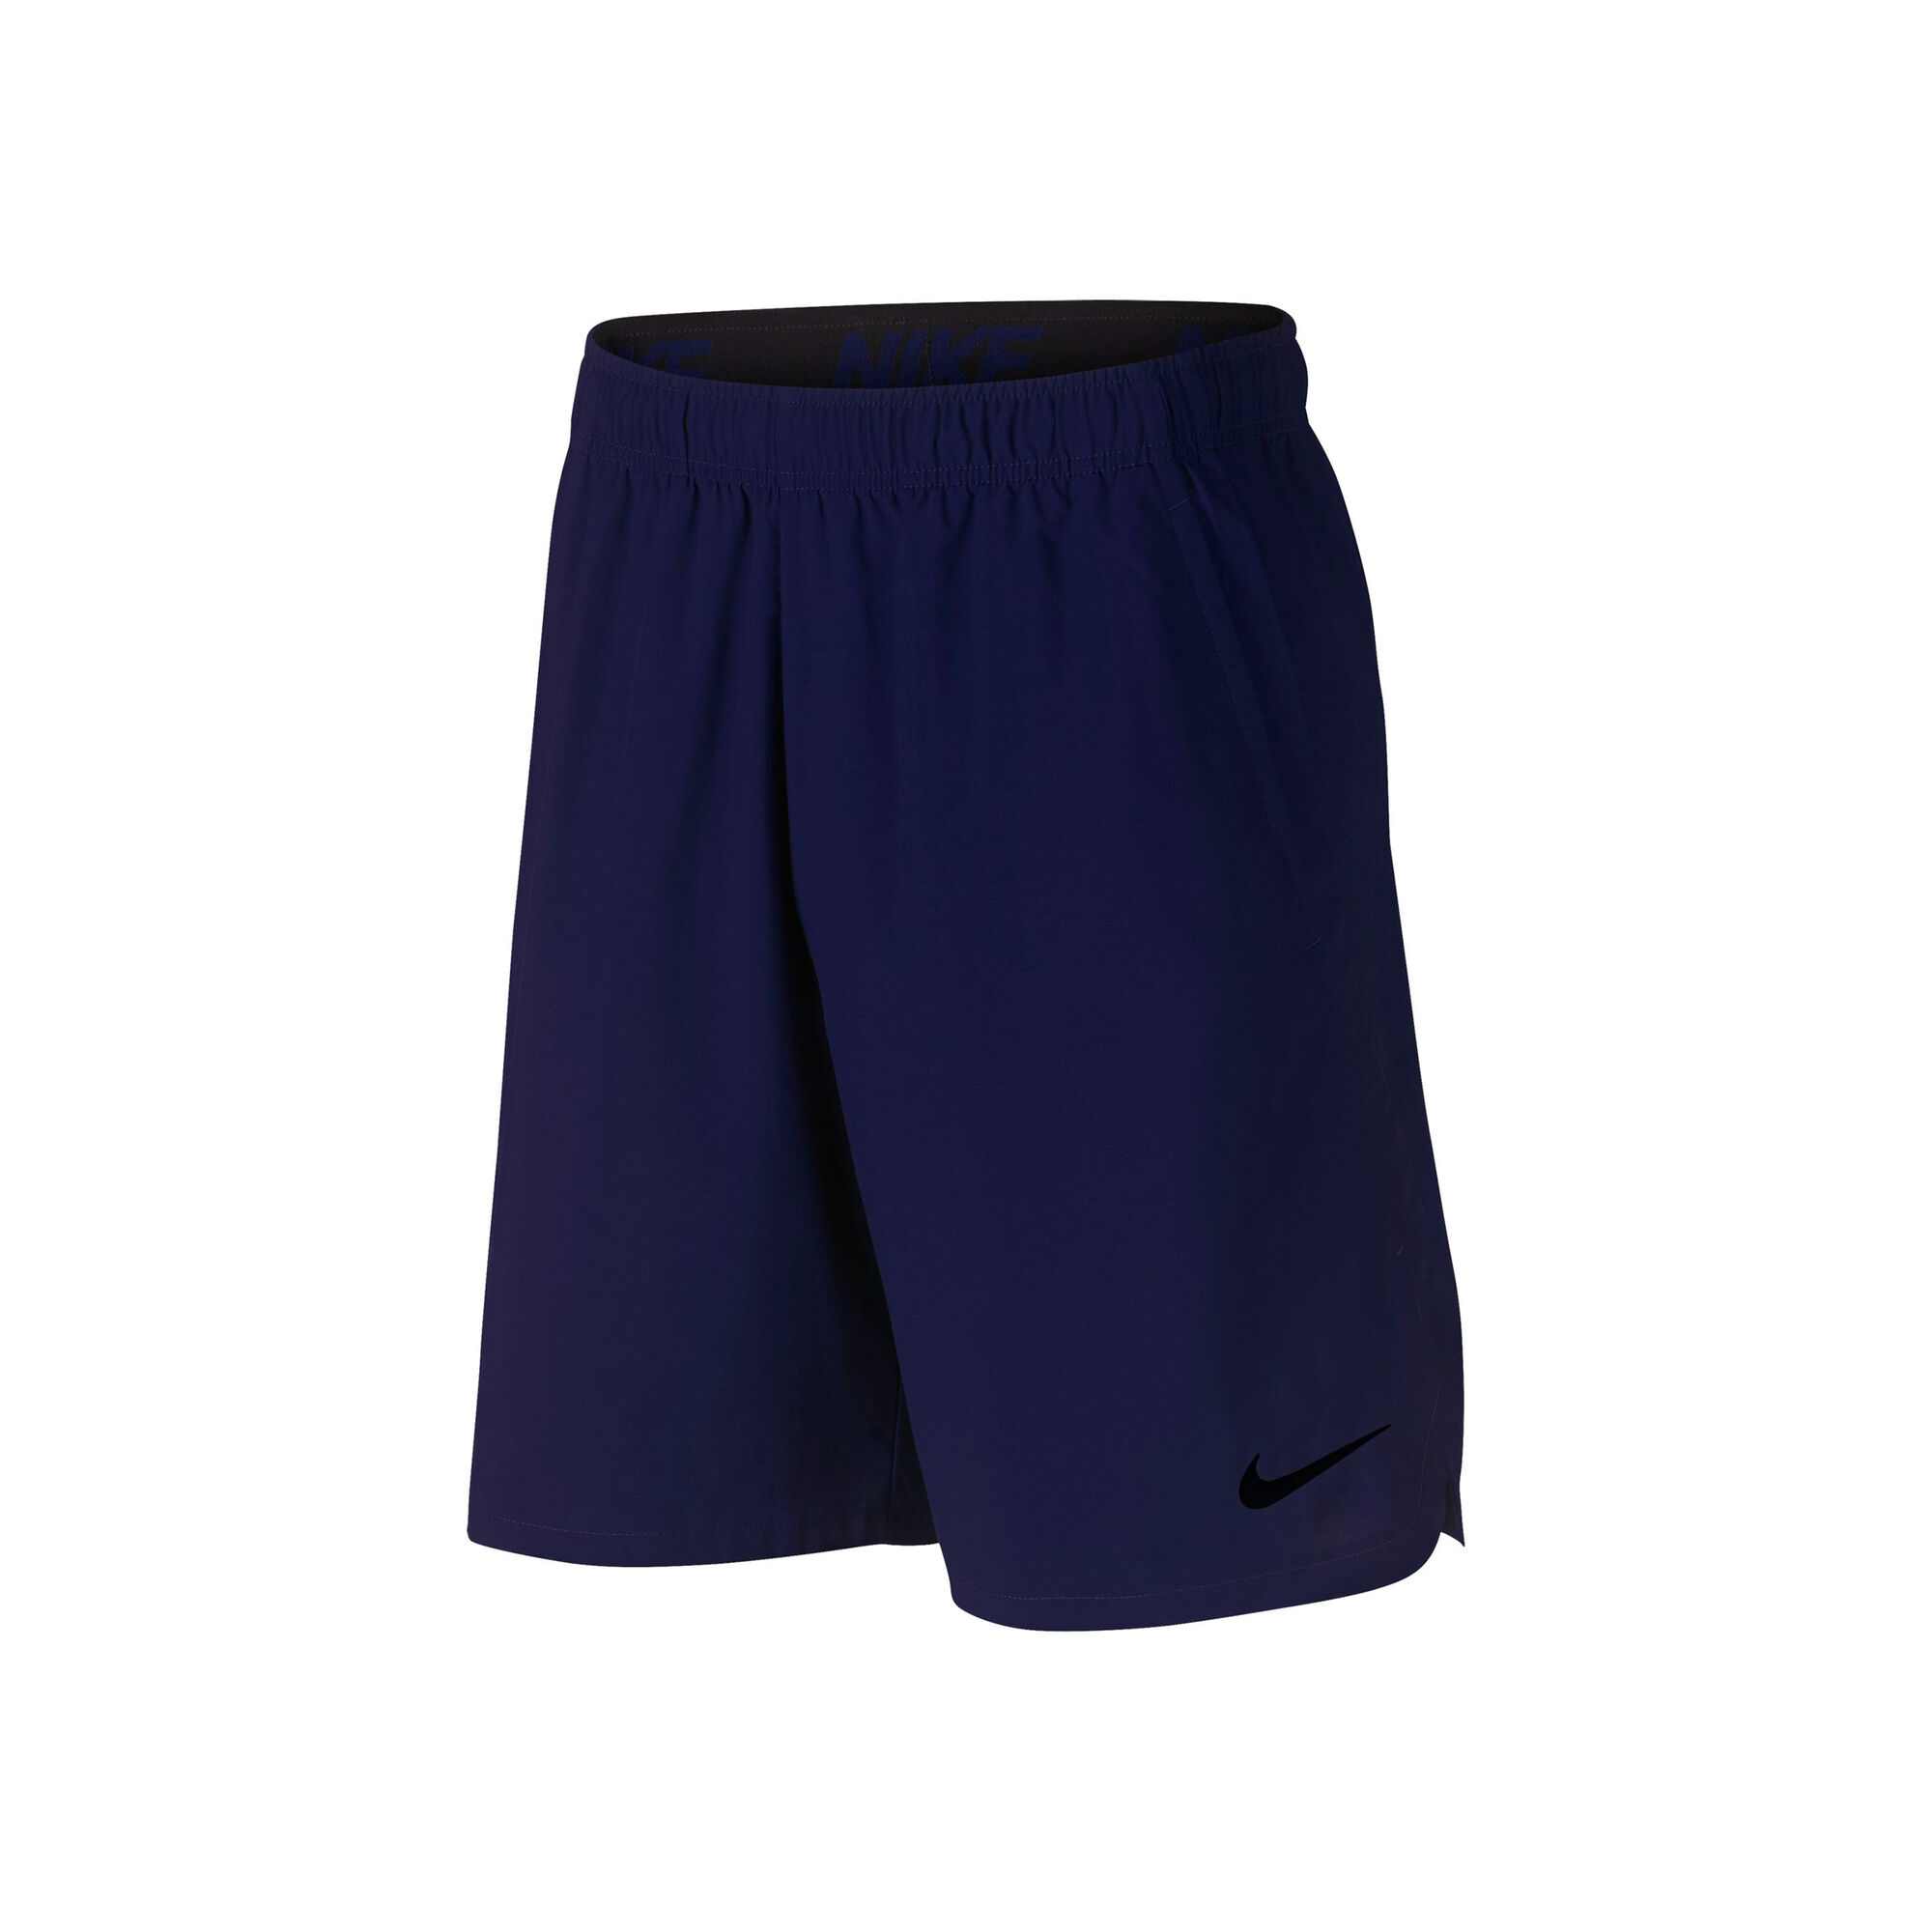 buy Nike Flex Shorts Men - Dark Blue, Black online | Tennis-Point